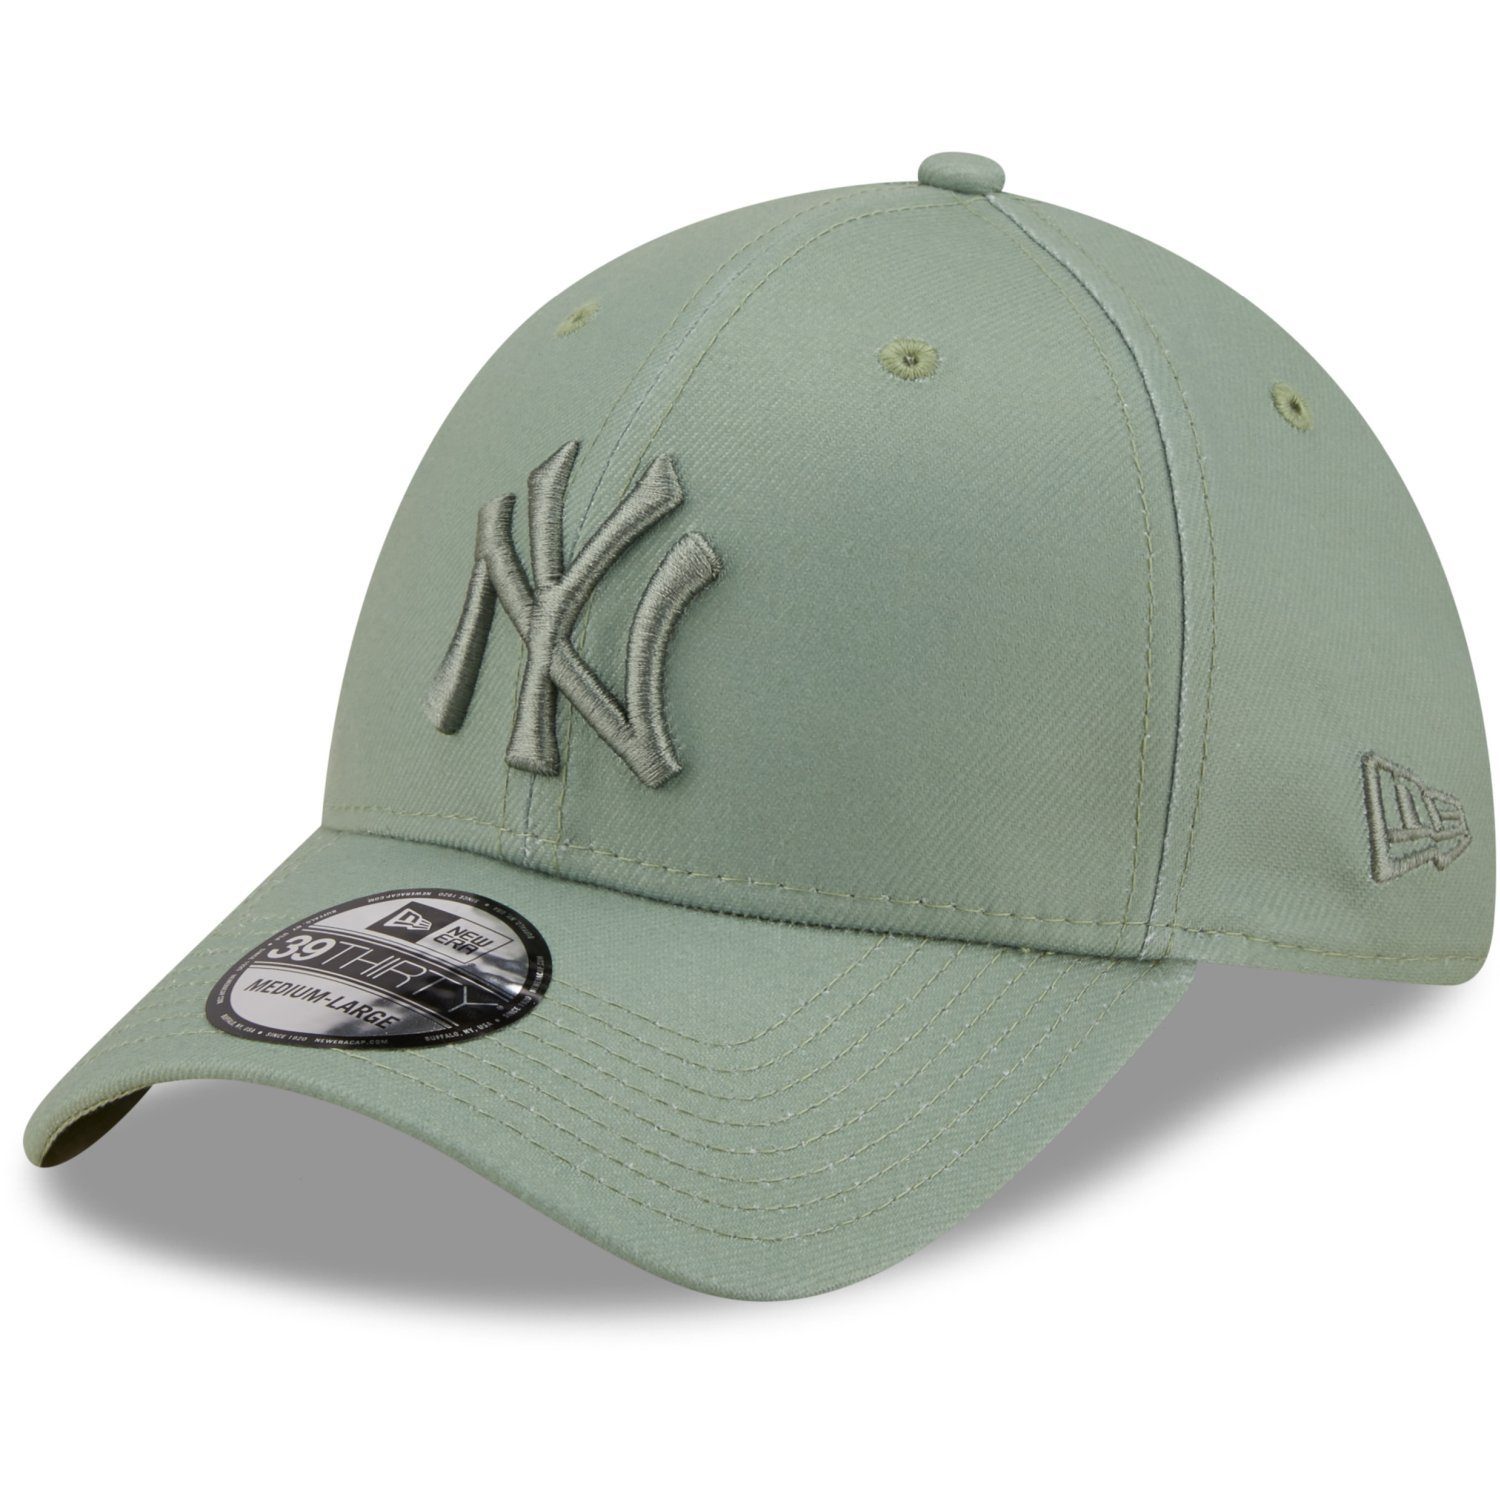 New Era Flex Cap 39Thirty Stretch New York Yankees jade